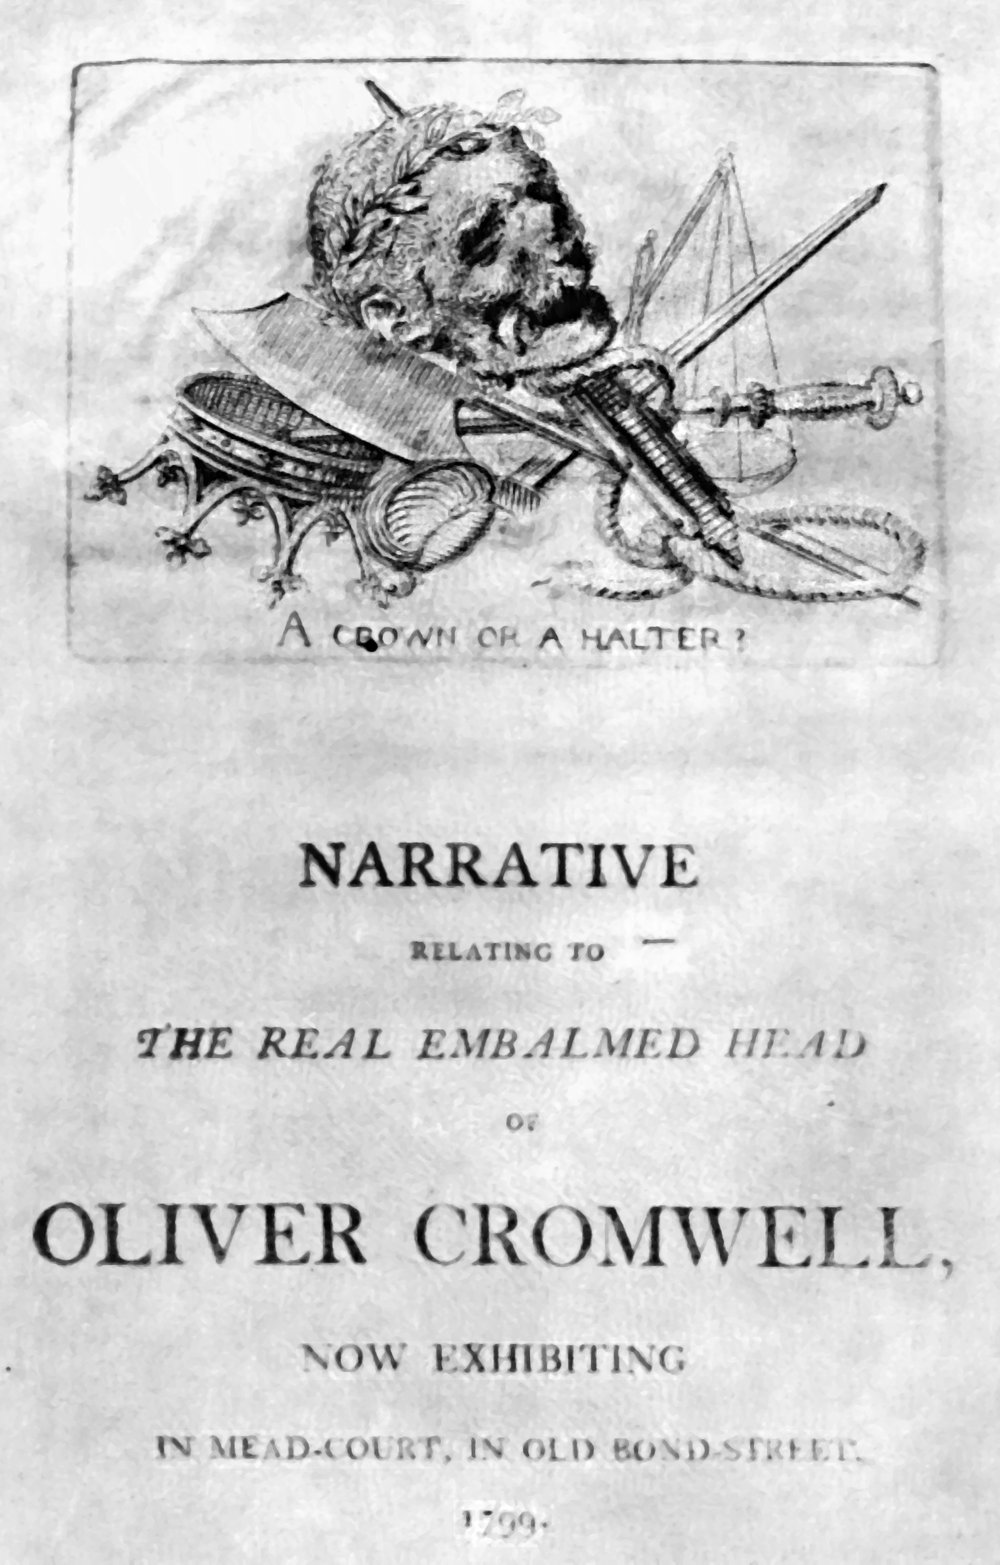 Oliver_Cromwell's_head_advertisement,_1799.jpg